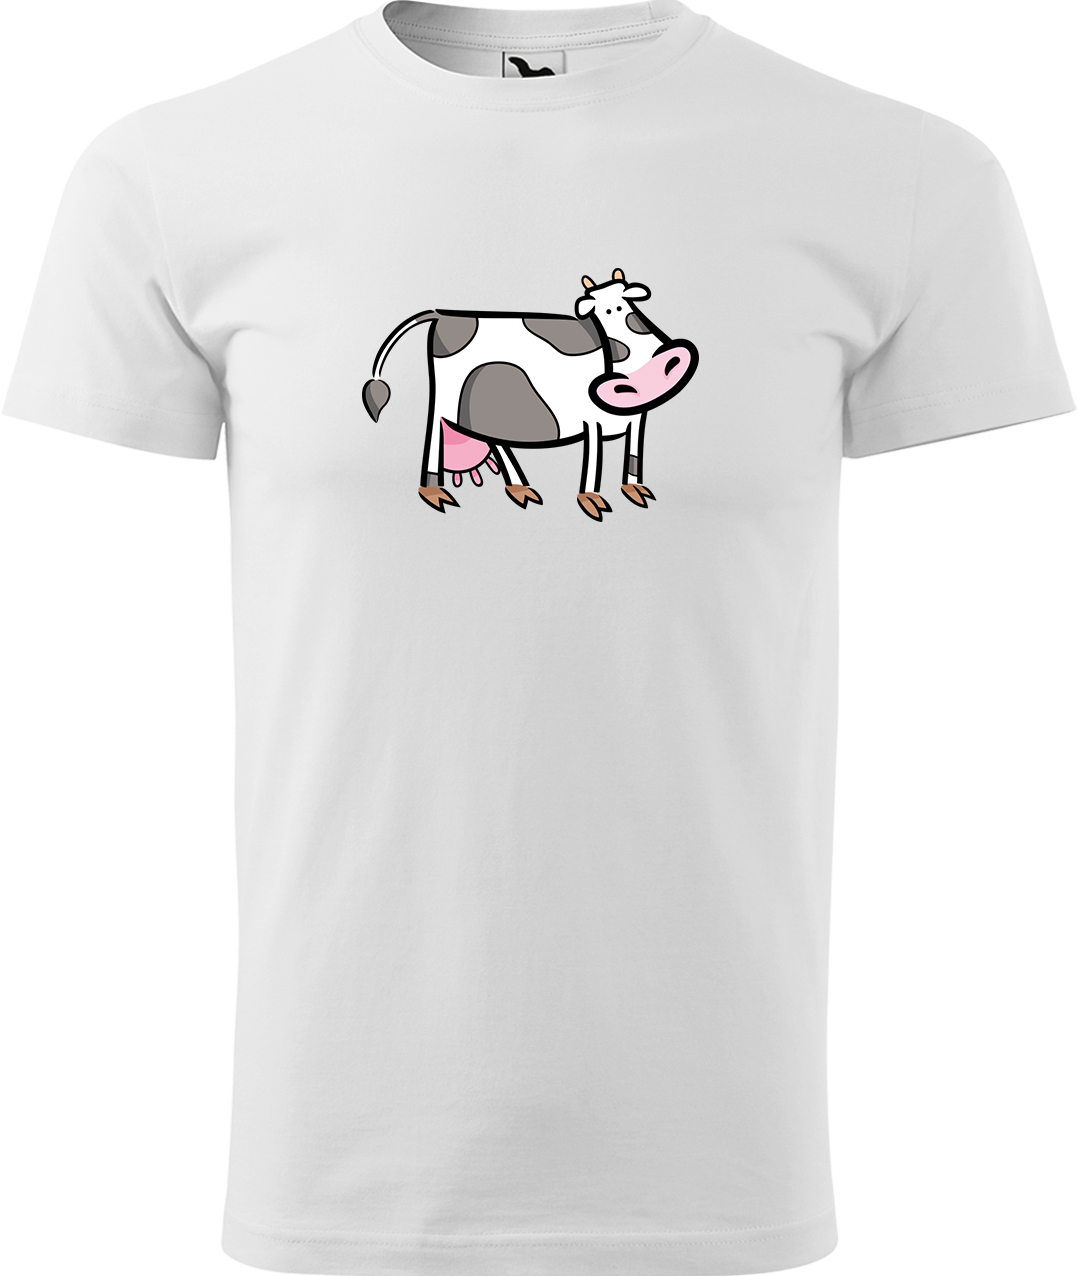 Pánské tričko s krávou - Kravička Velikost: 2XL, Barva: Bílá (00), Střih: pánský